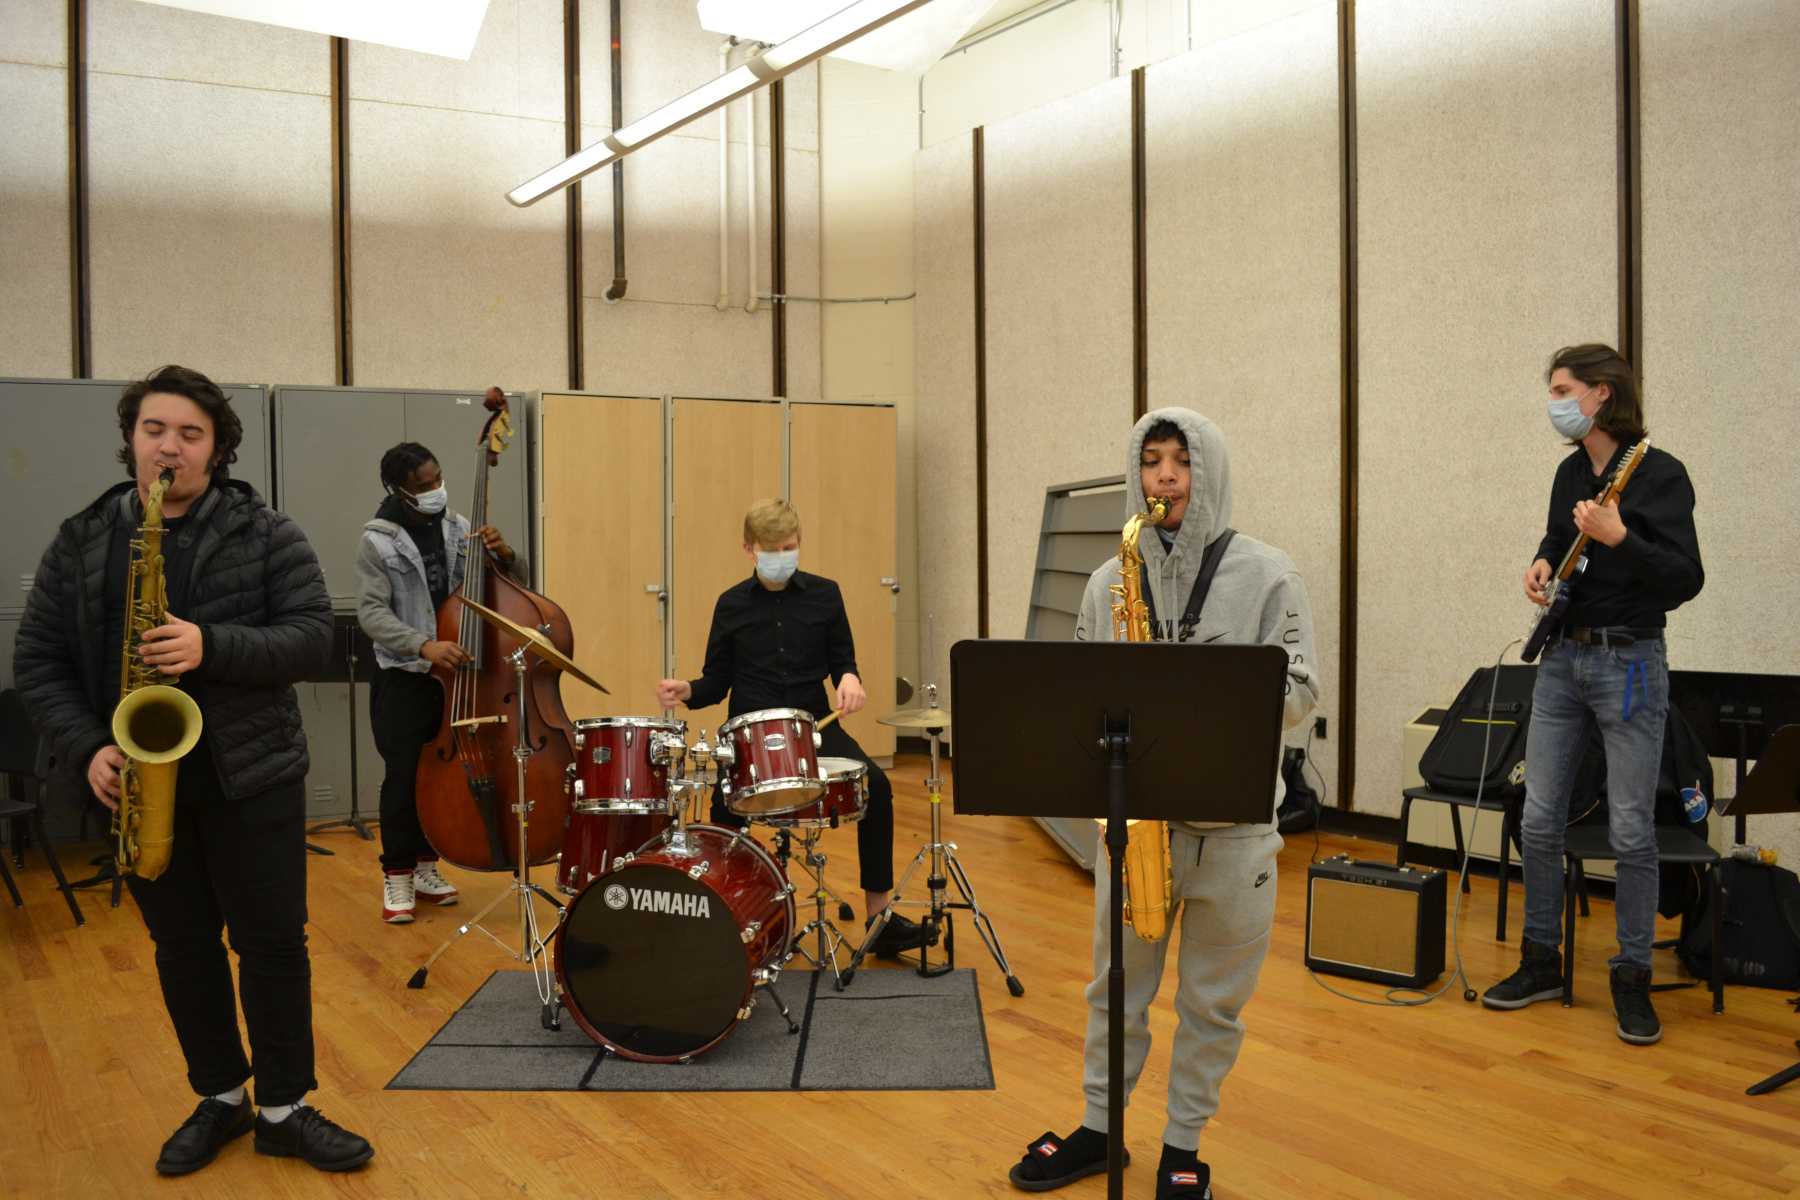 Jazz musicians rehearsing in music room